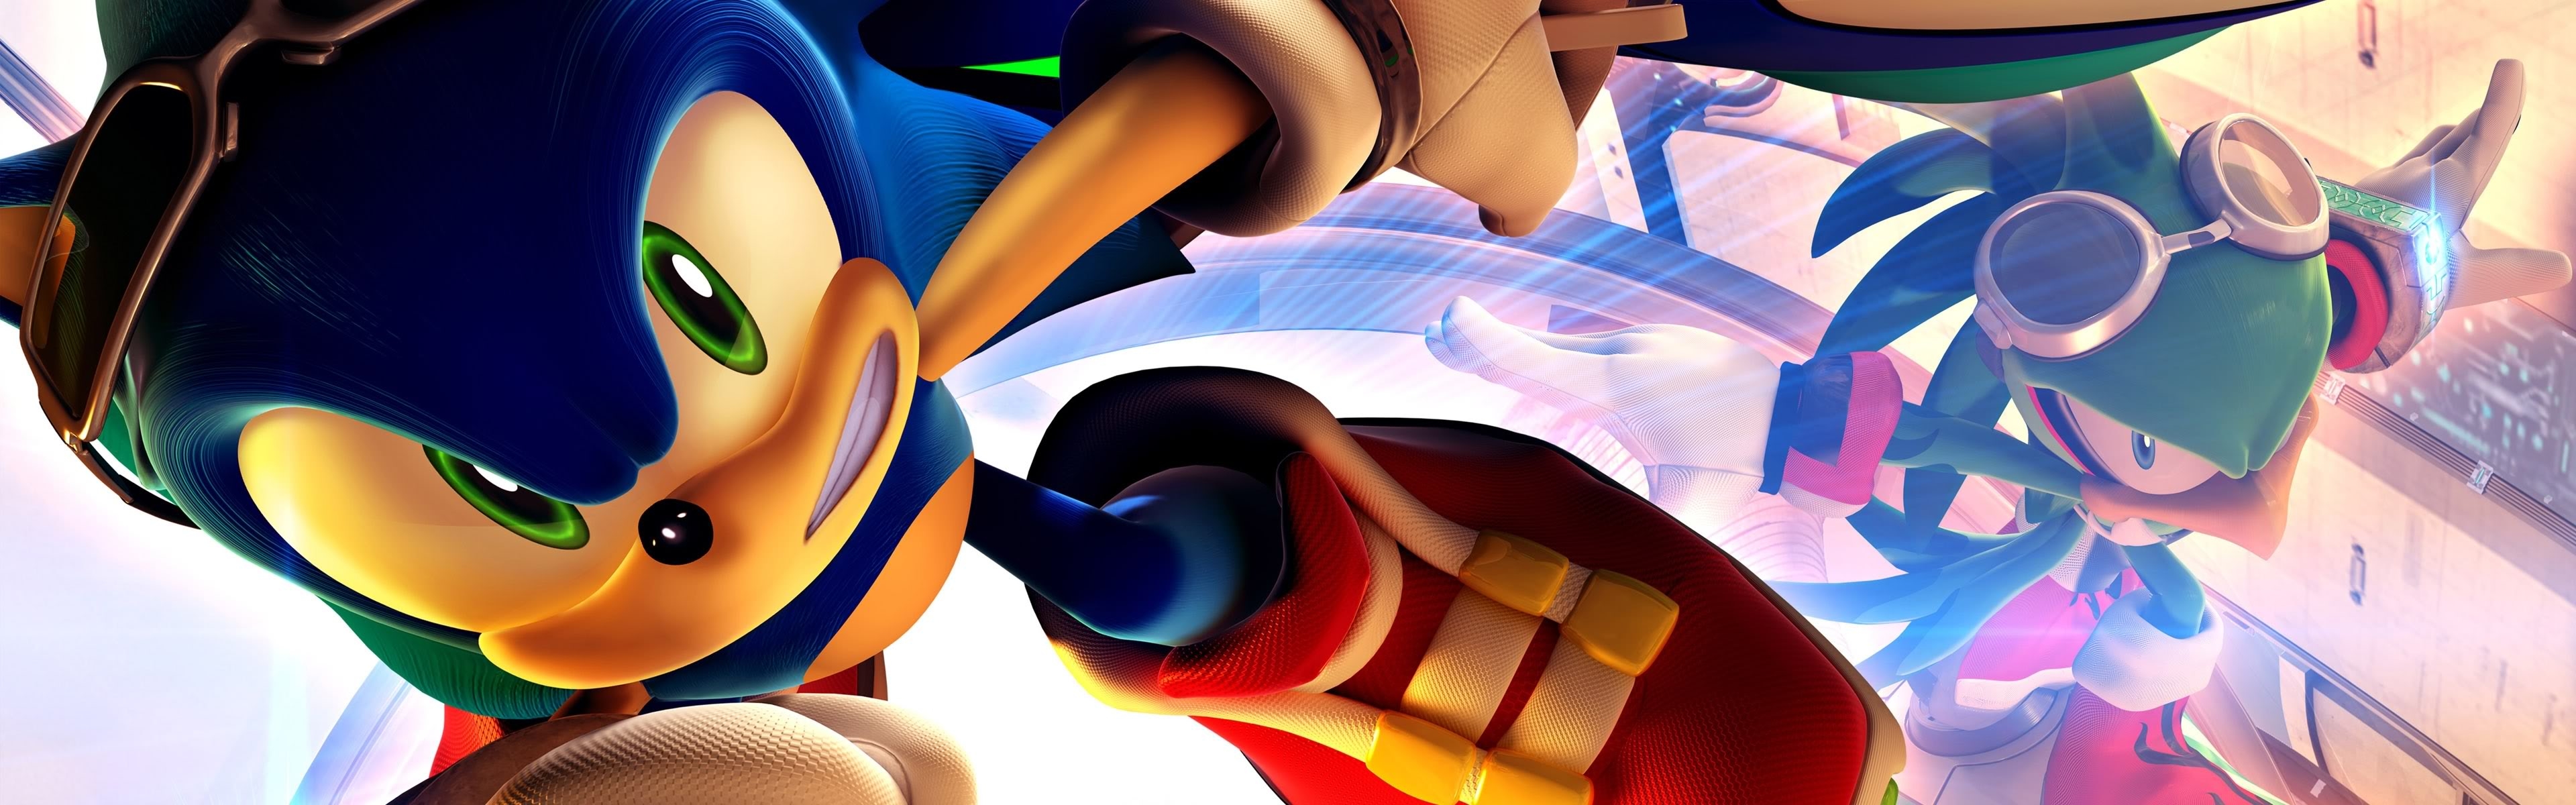 Sonic Riders Sonic Sonic The Hedgehog Jet The Hawk Zero Gravity Sega Hoverboard Video Game Art Artwo 3840x1200